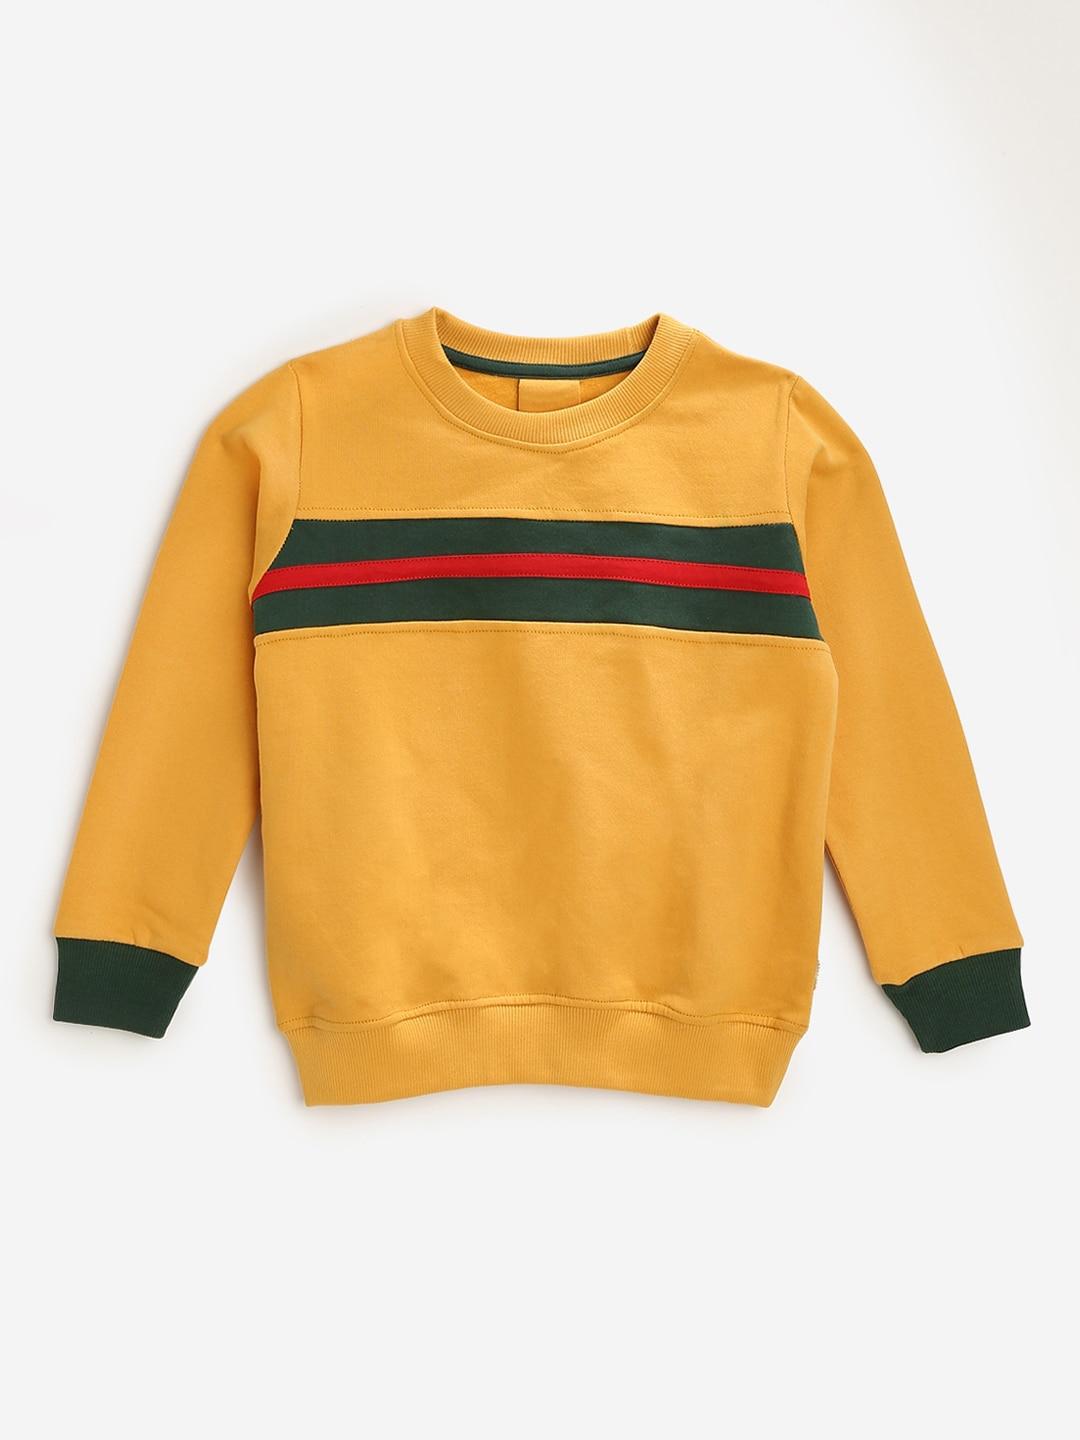 KIDSCRAFT Boys Yellow Striped Sweatshirt